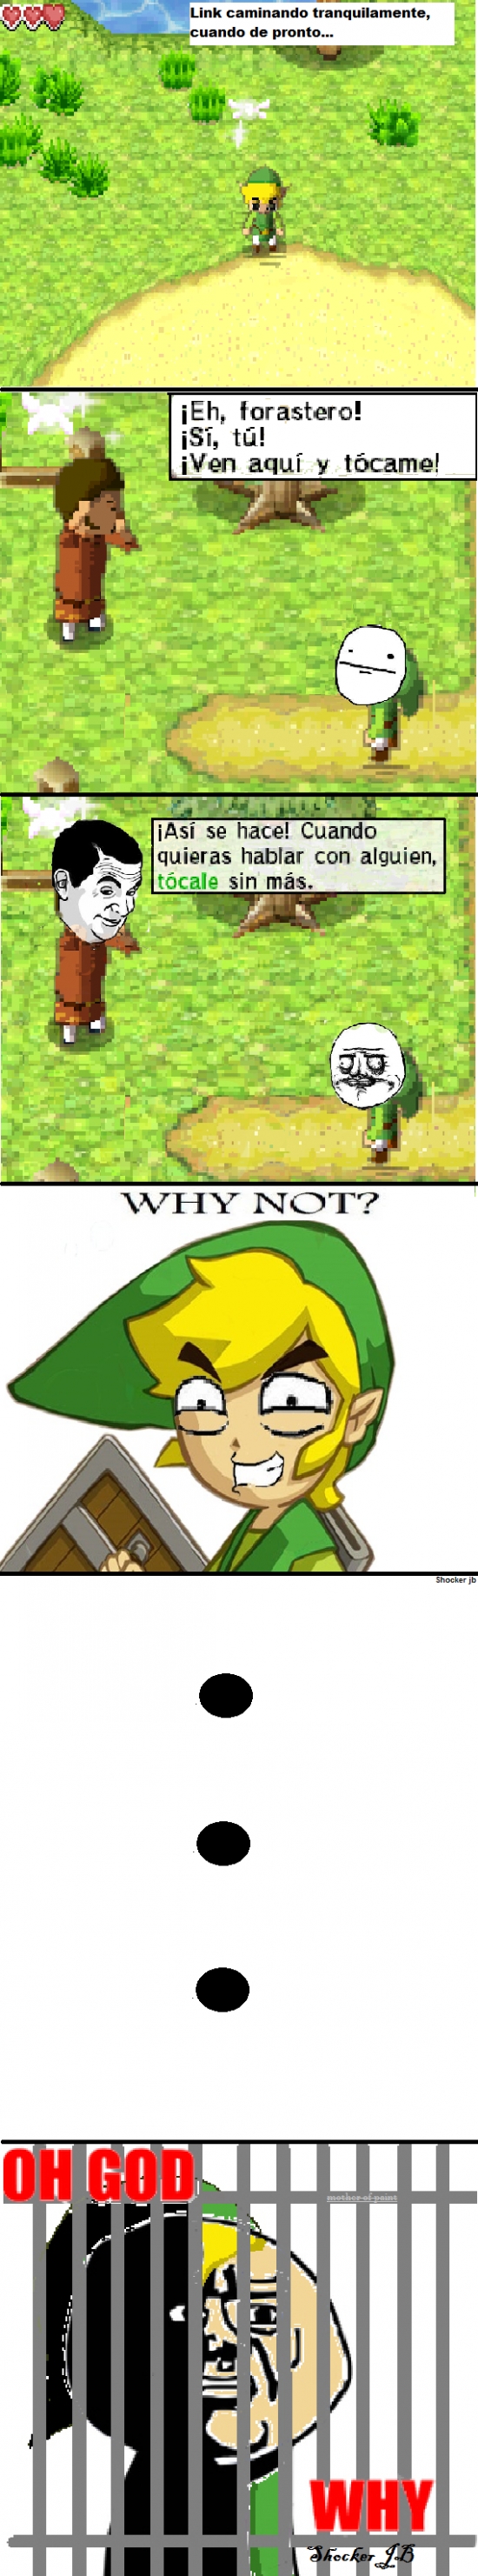 Link,mala idea,pervertido,tocar